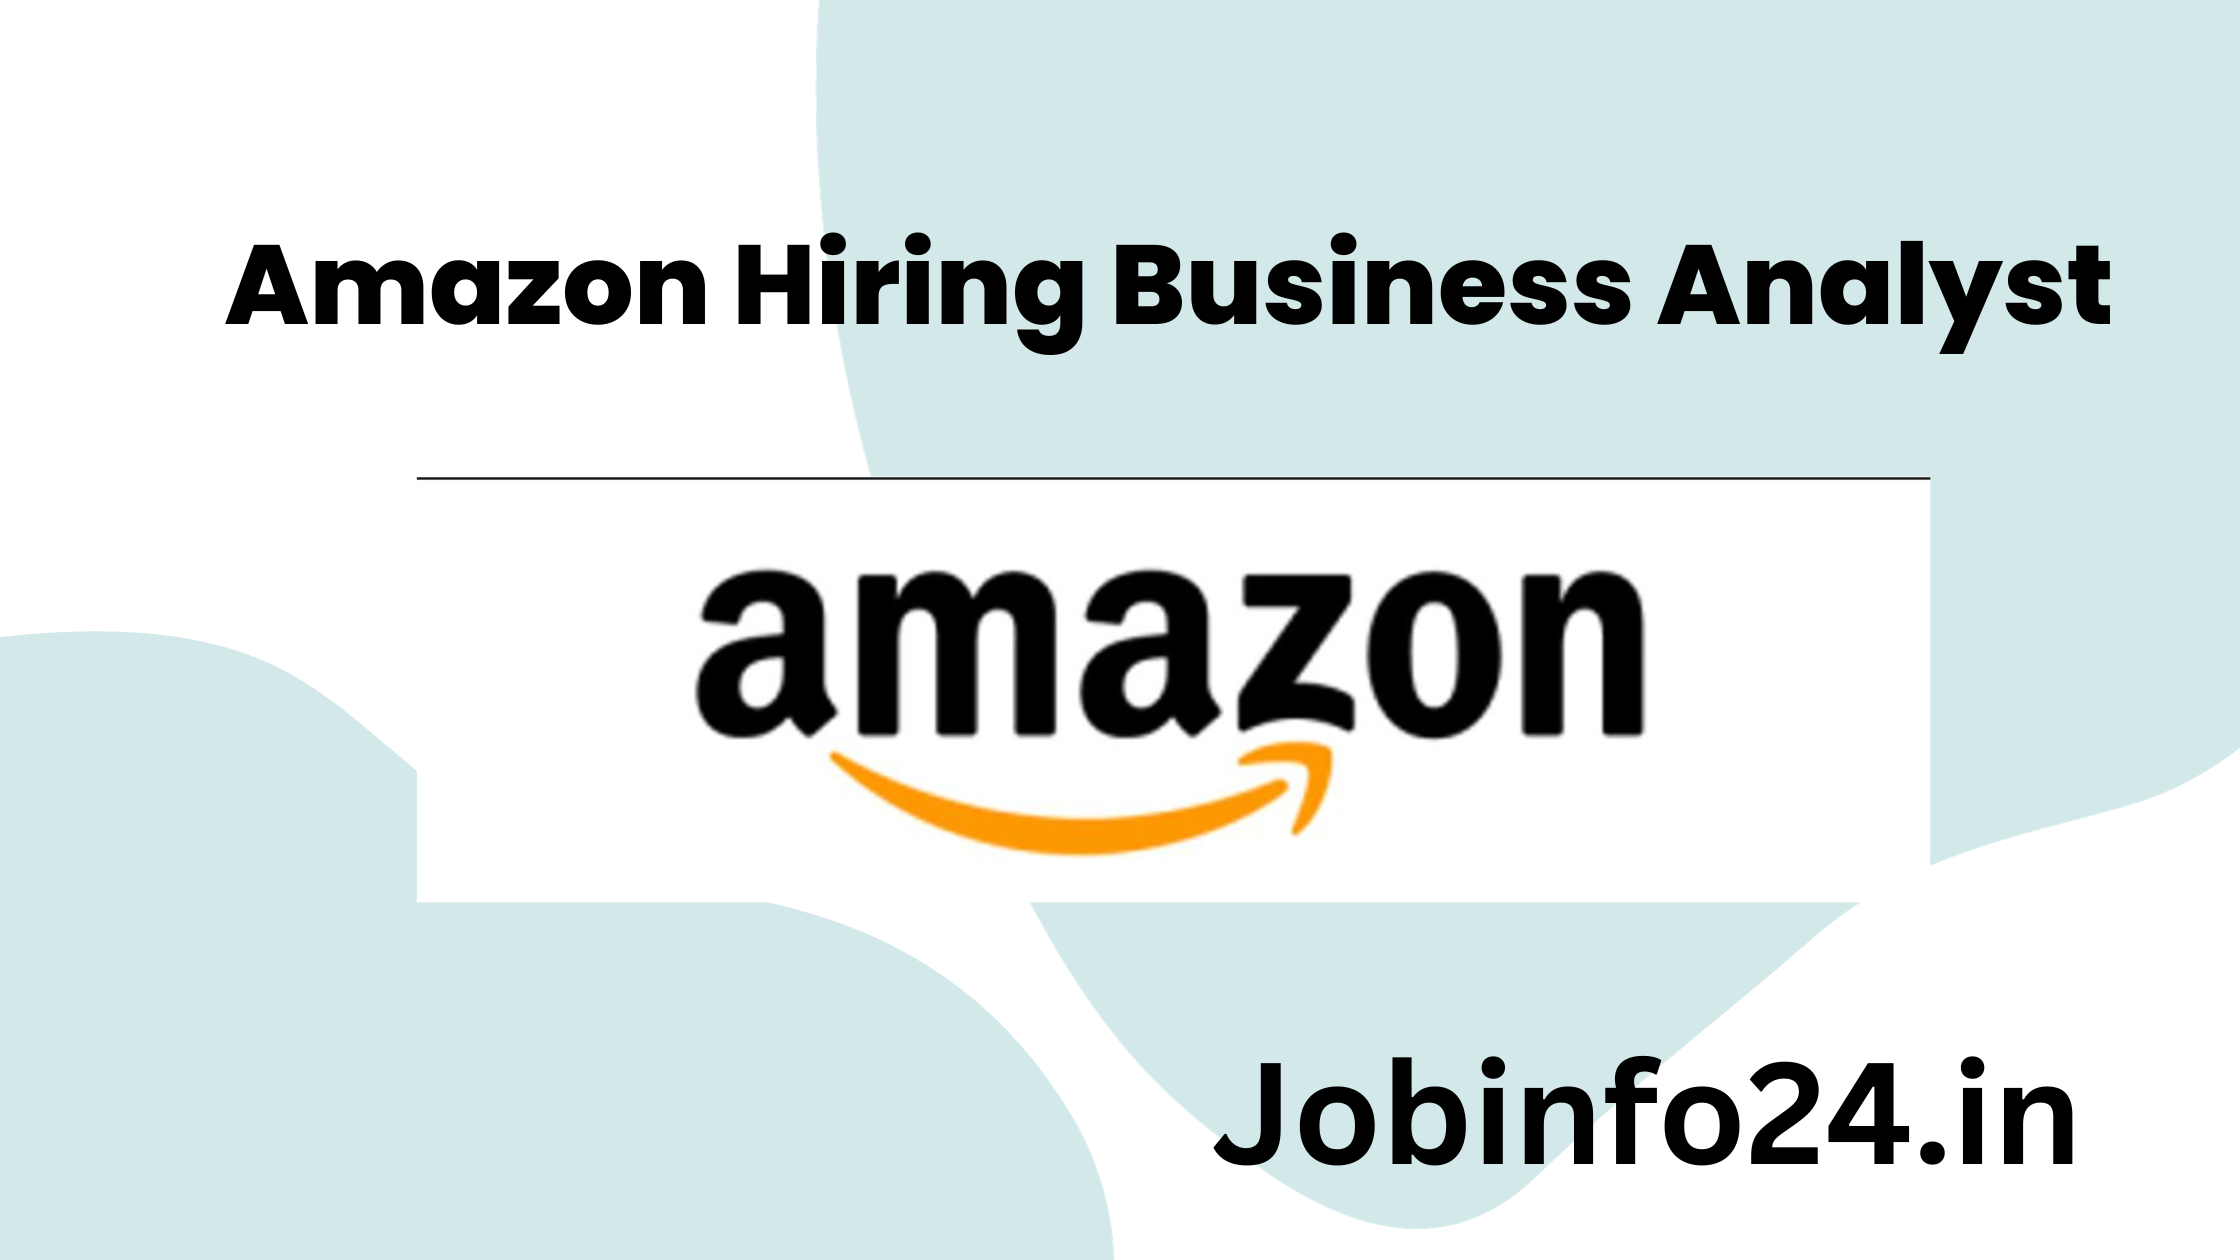 Amazon Hiring Business Analyst